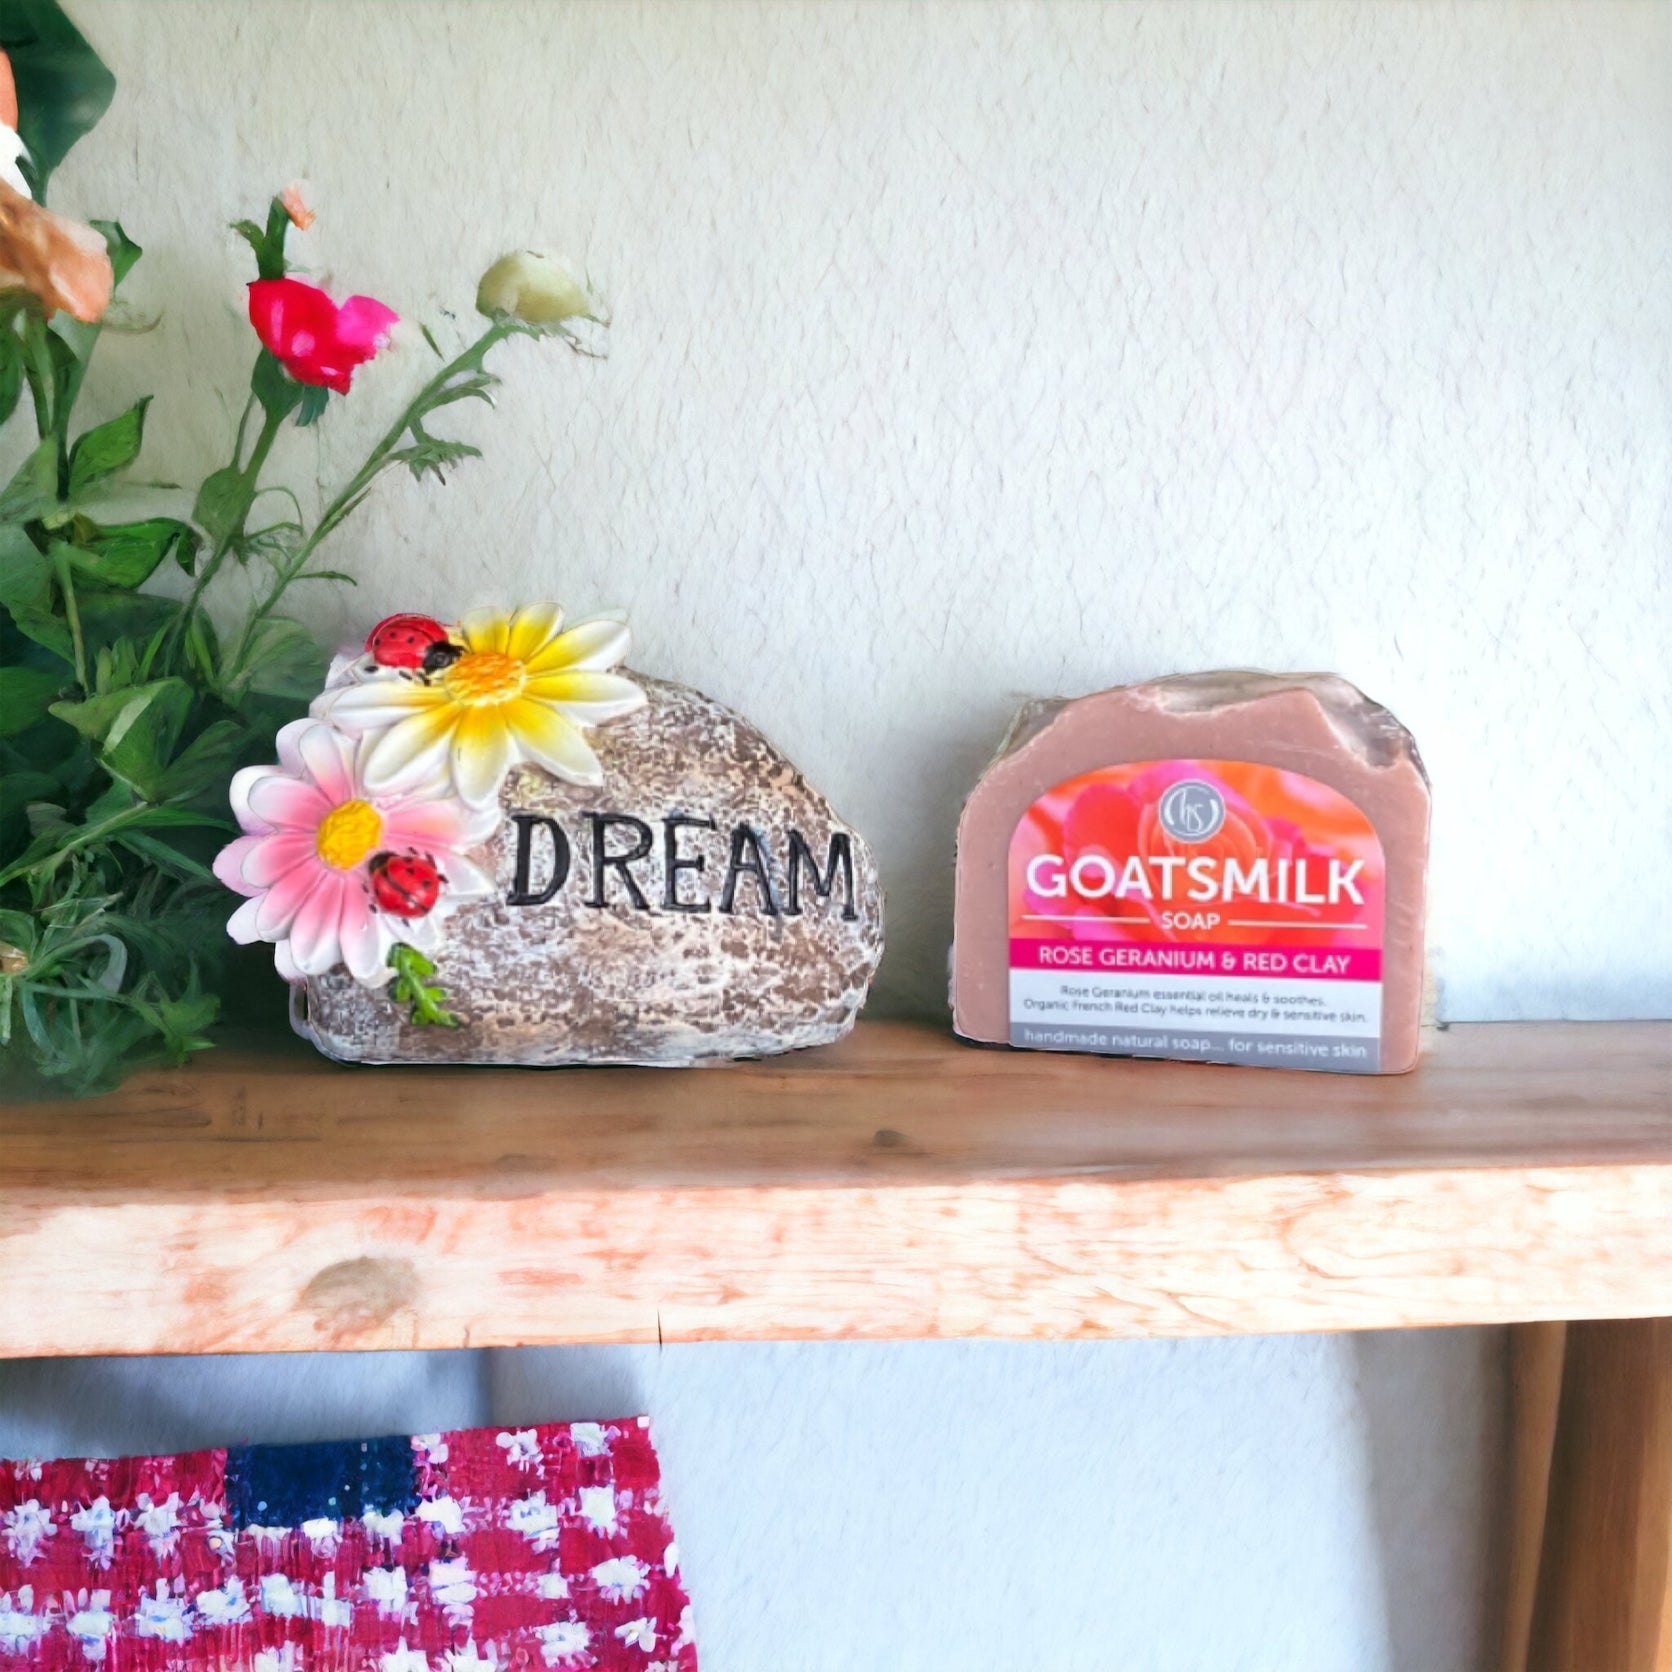 Garden Dream Gardener Stone Goatmilk Soap Gift - The Renmy Store Homewares & Gifts 